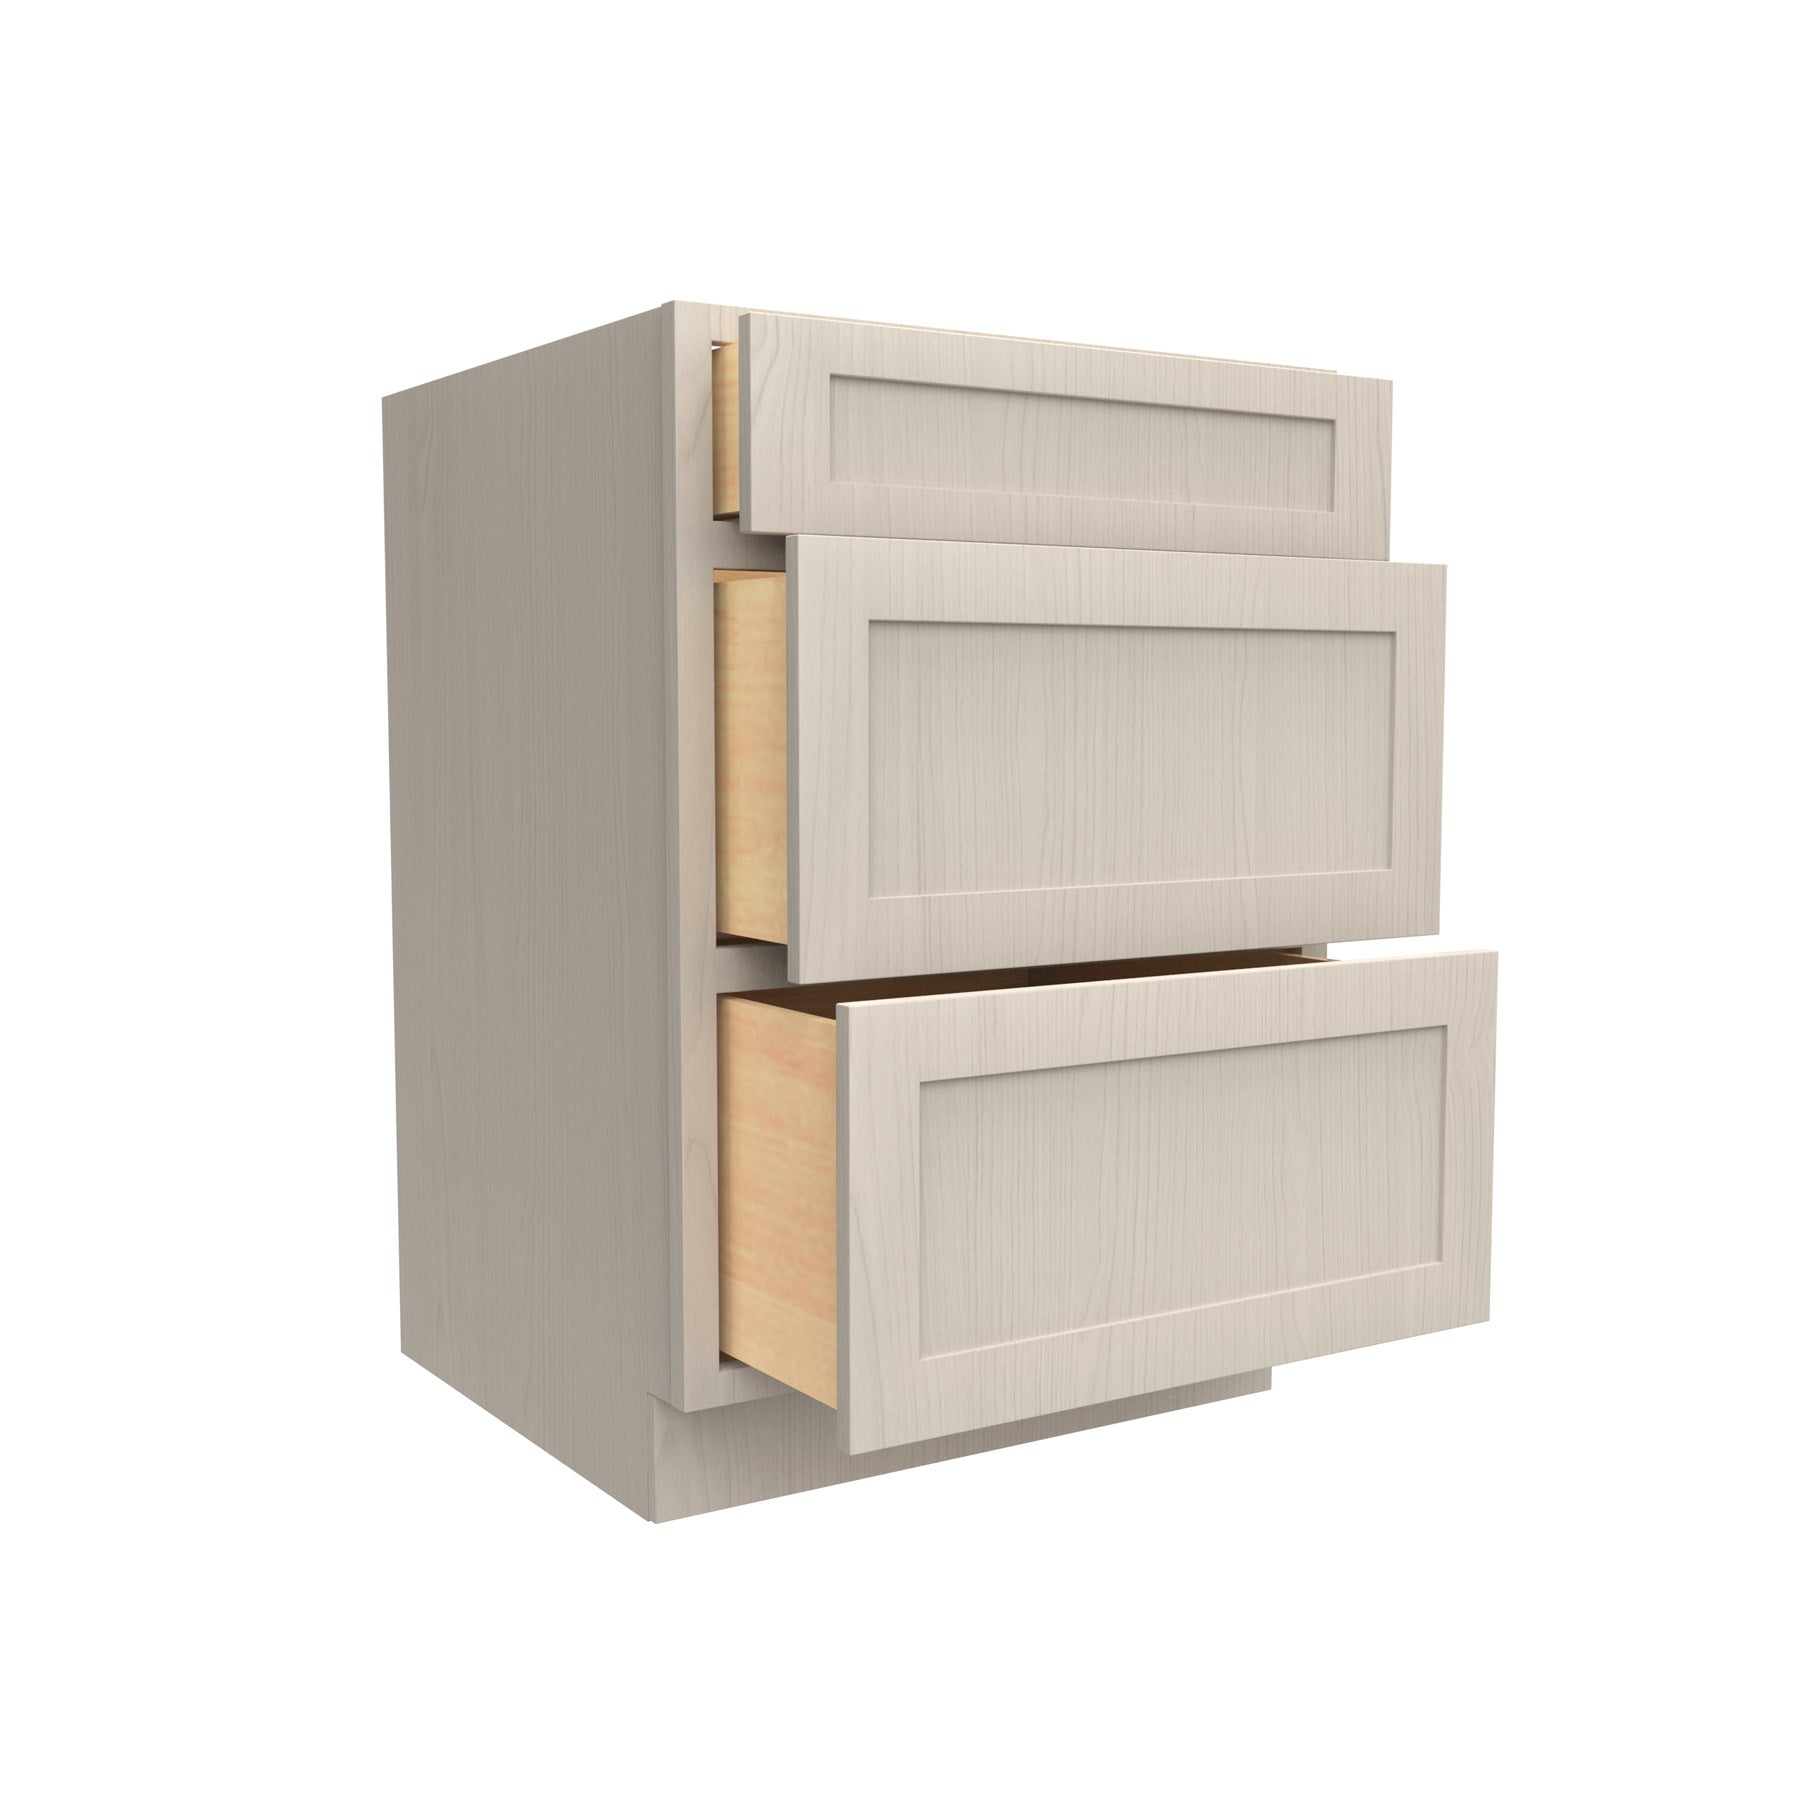 3 Drawer Base Cabinet | Elegant Stone | 24W x 34.5H x 24D